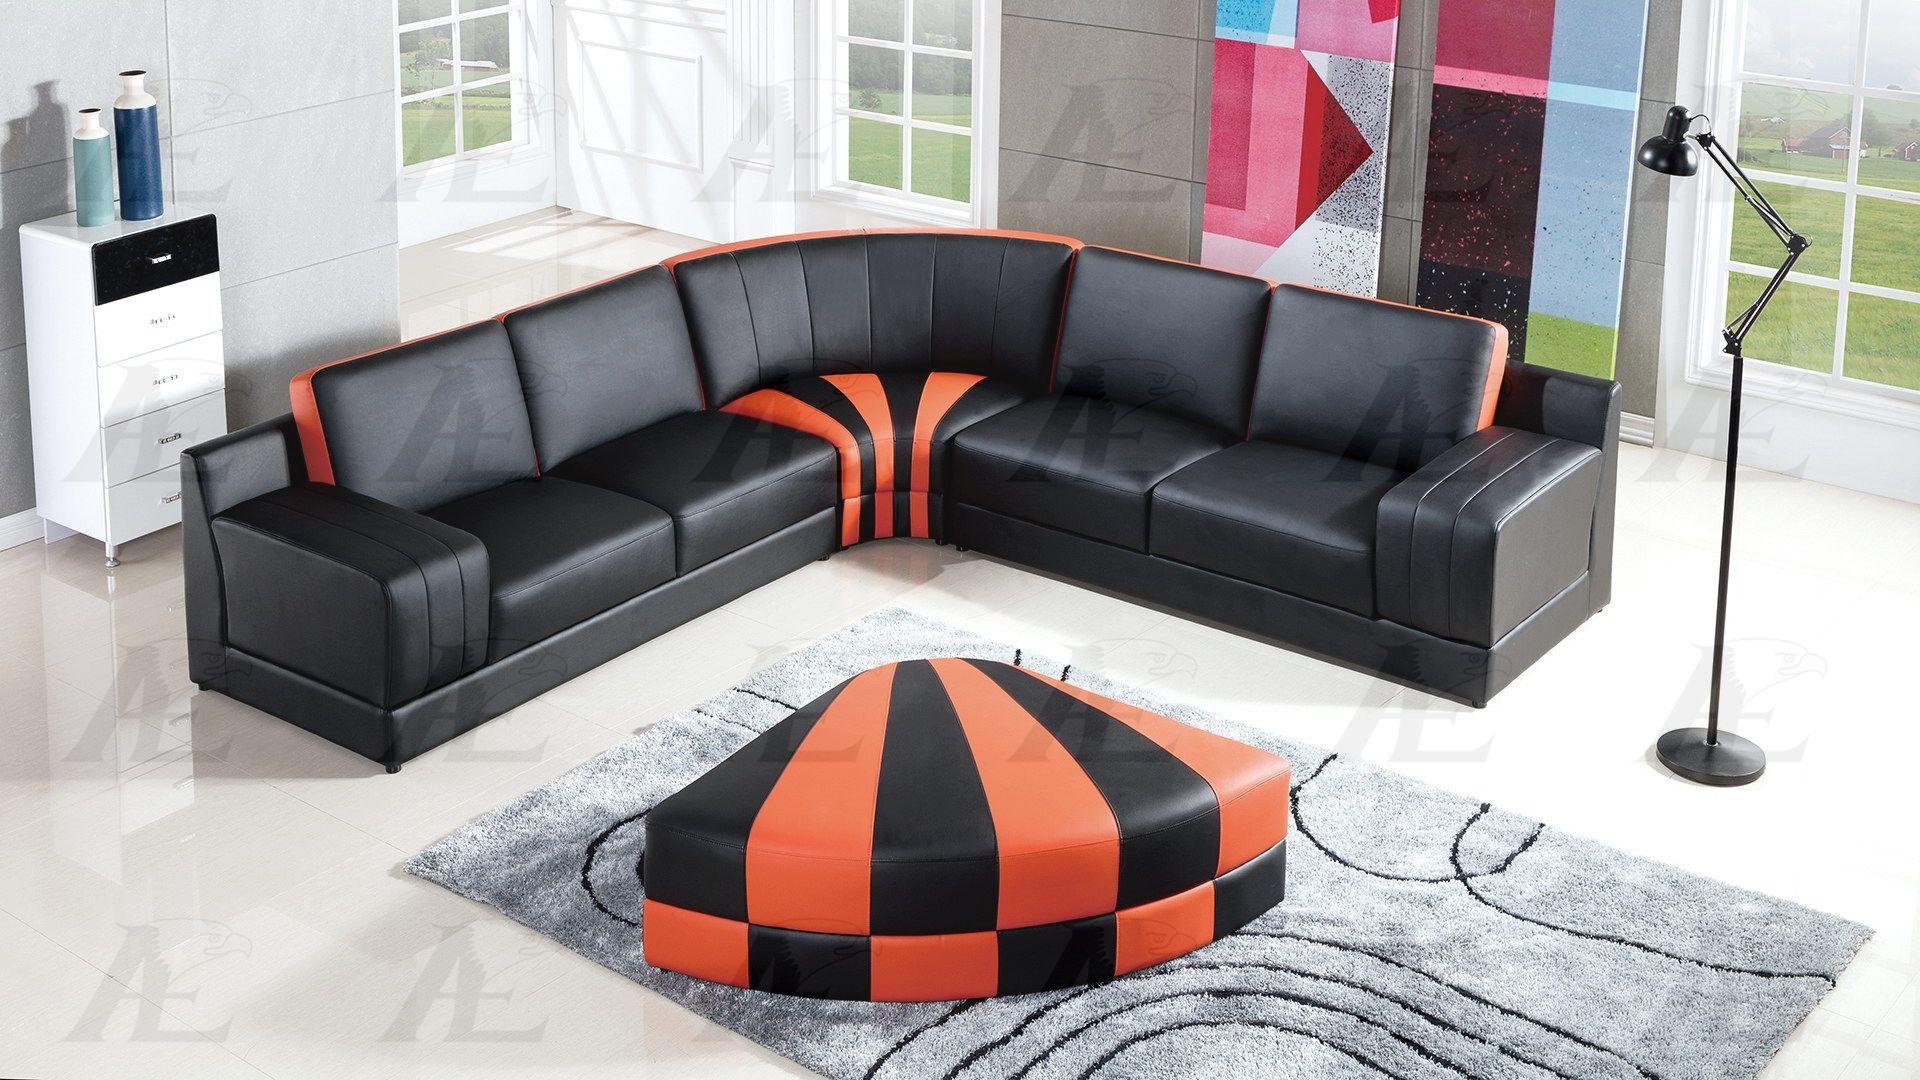 American Eagle Furniture AE-L901M-BK.W Sectional Sofa Living Room Set